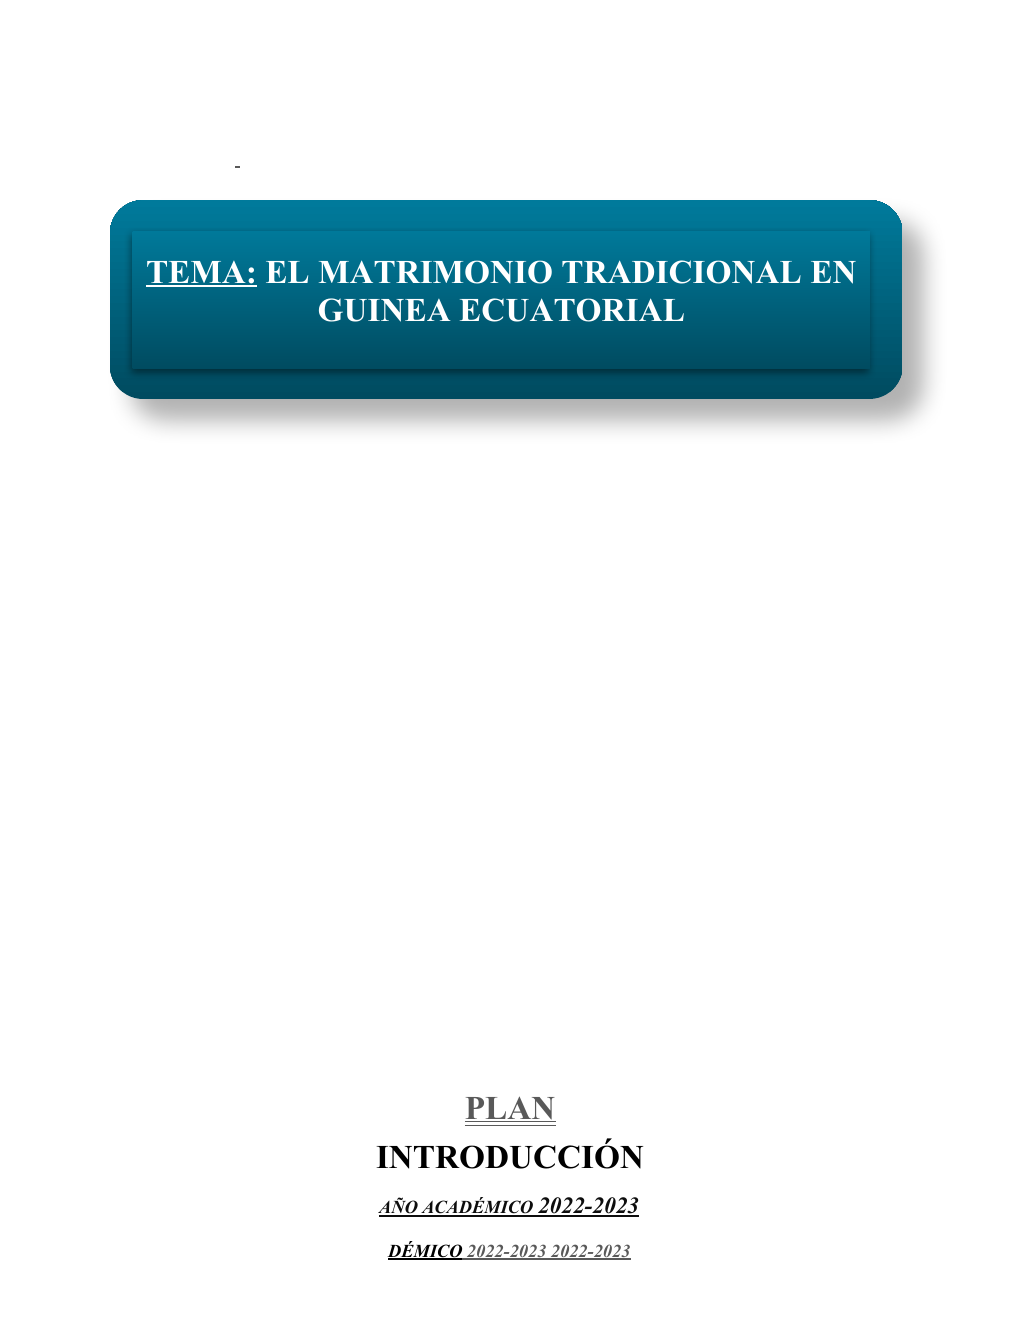 Prévisualisation du document mariage traditionnel en Guinée Equatorial / EL MATRIMONIO TRADICIONAL EN GUINEA ECUATORIAL